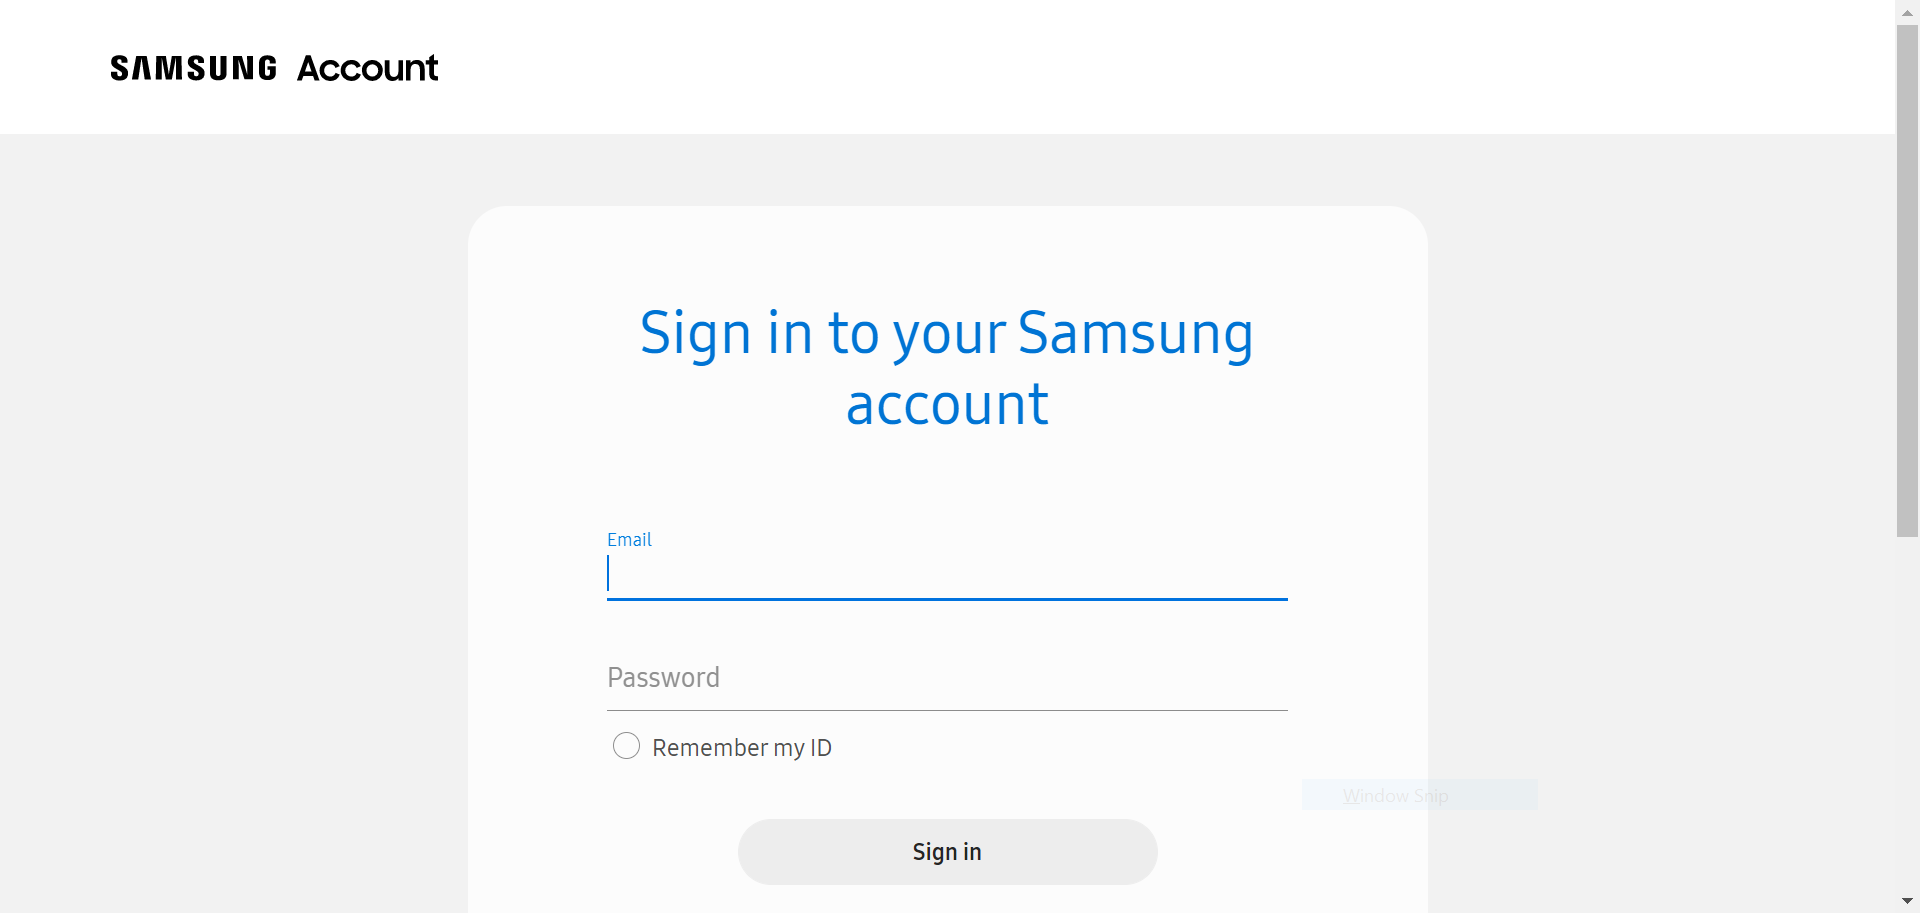 Samsung Account Login page